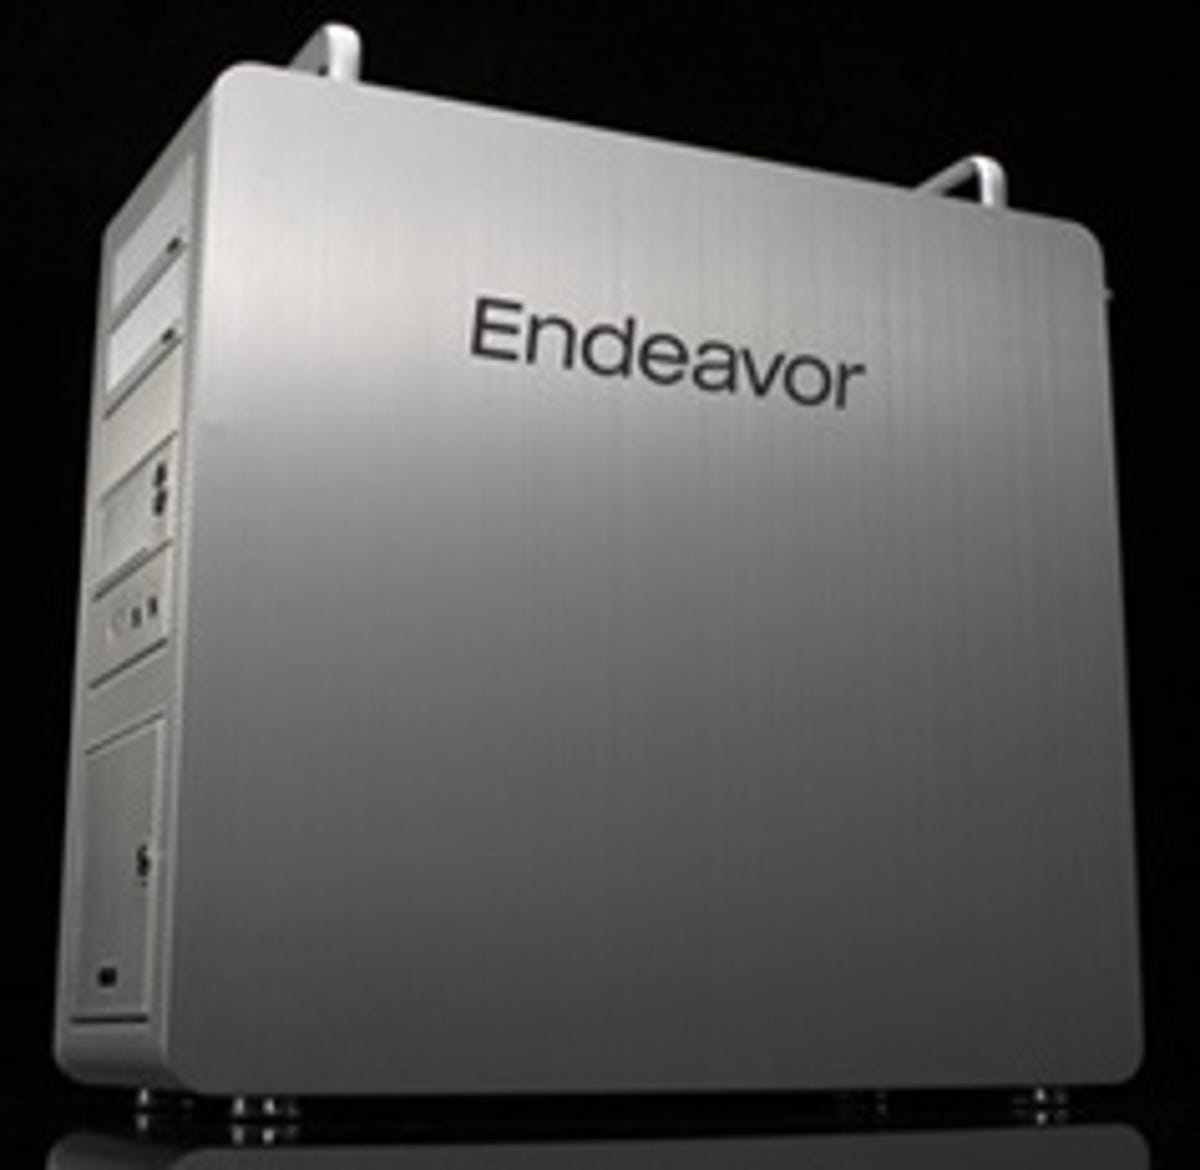 Epson's Endeavor Pro7000 packs Intel's new six-core processor